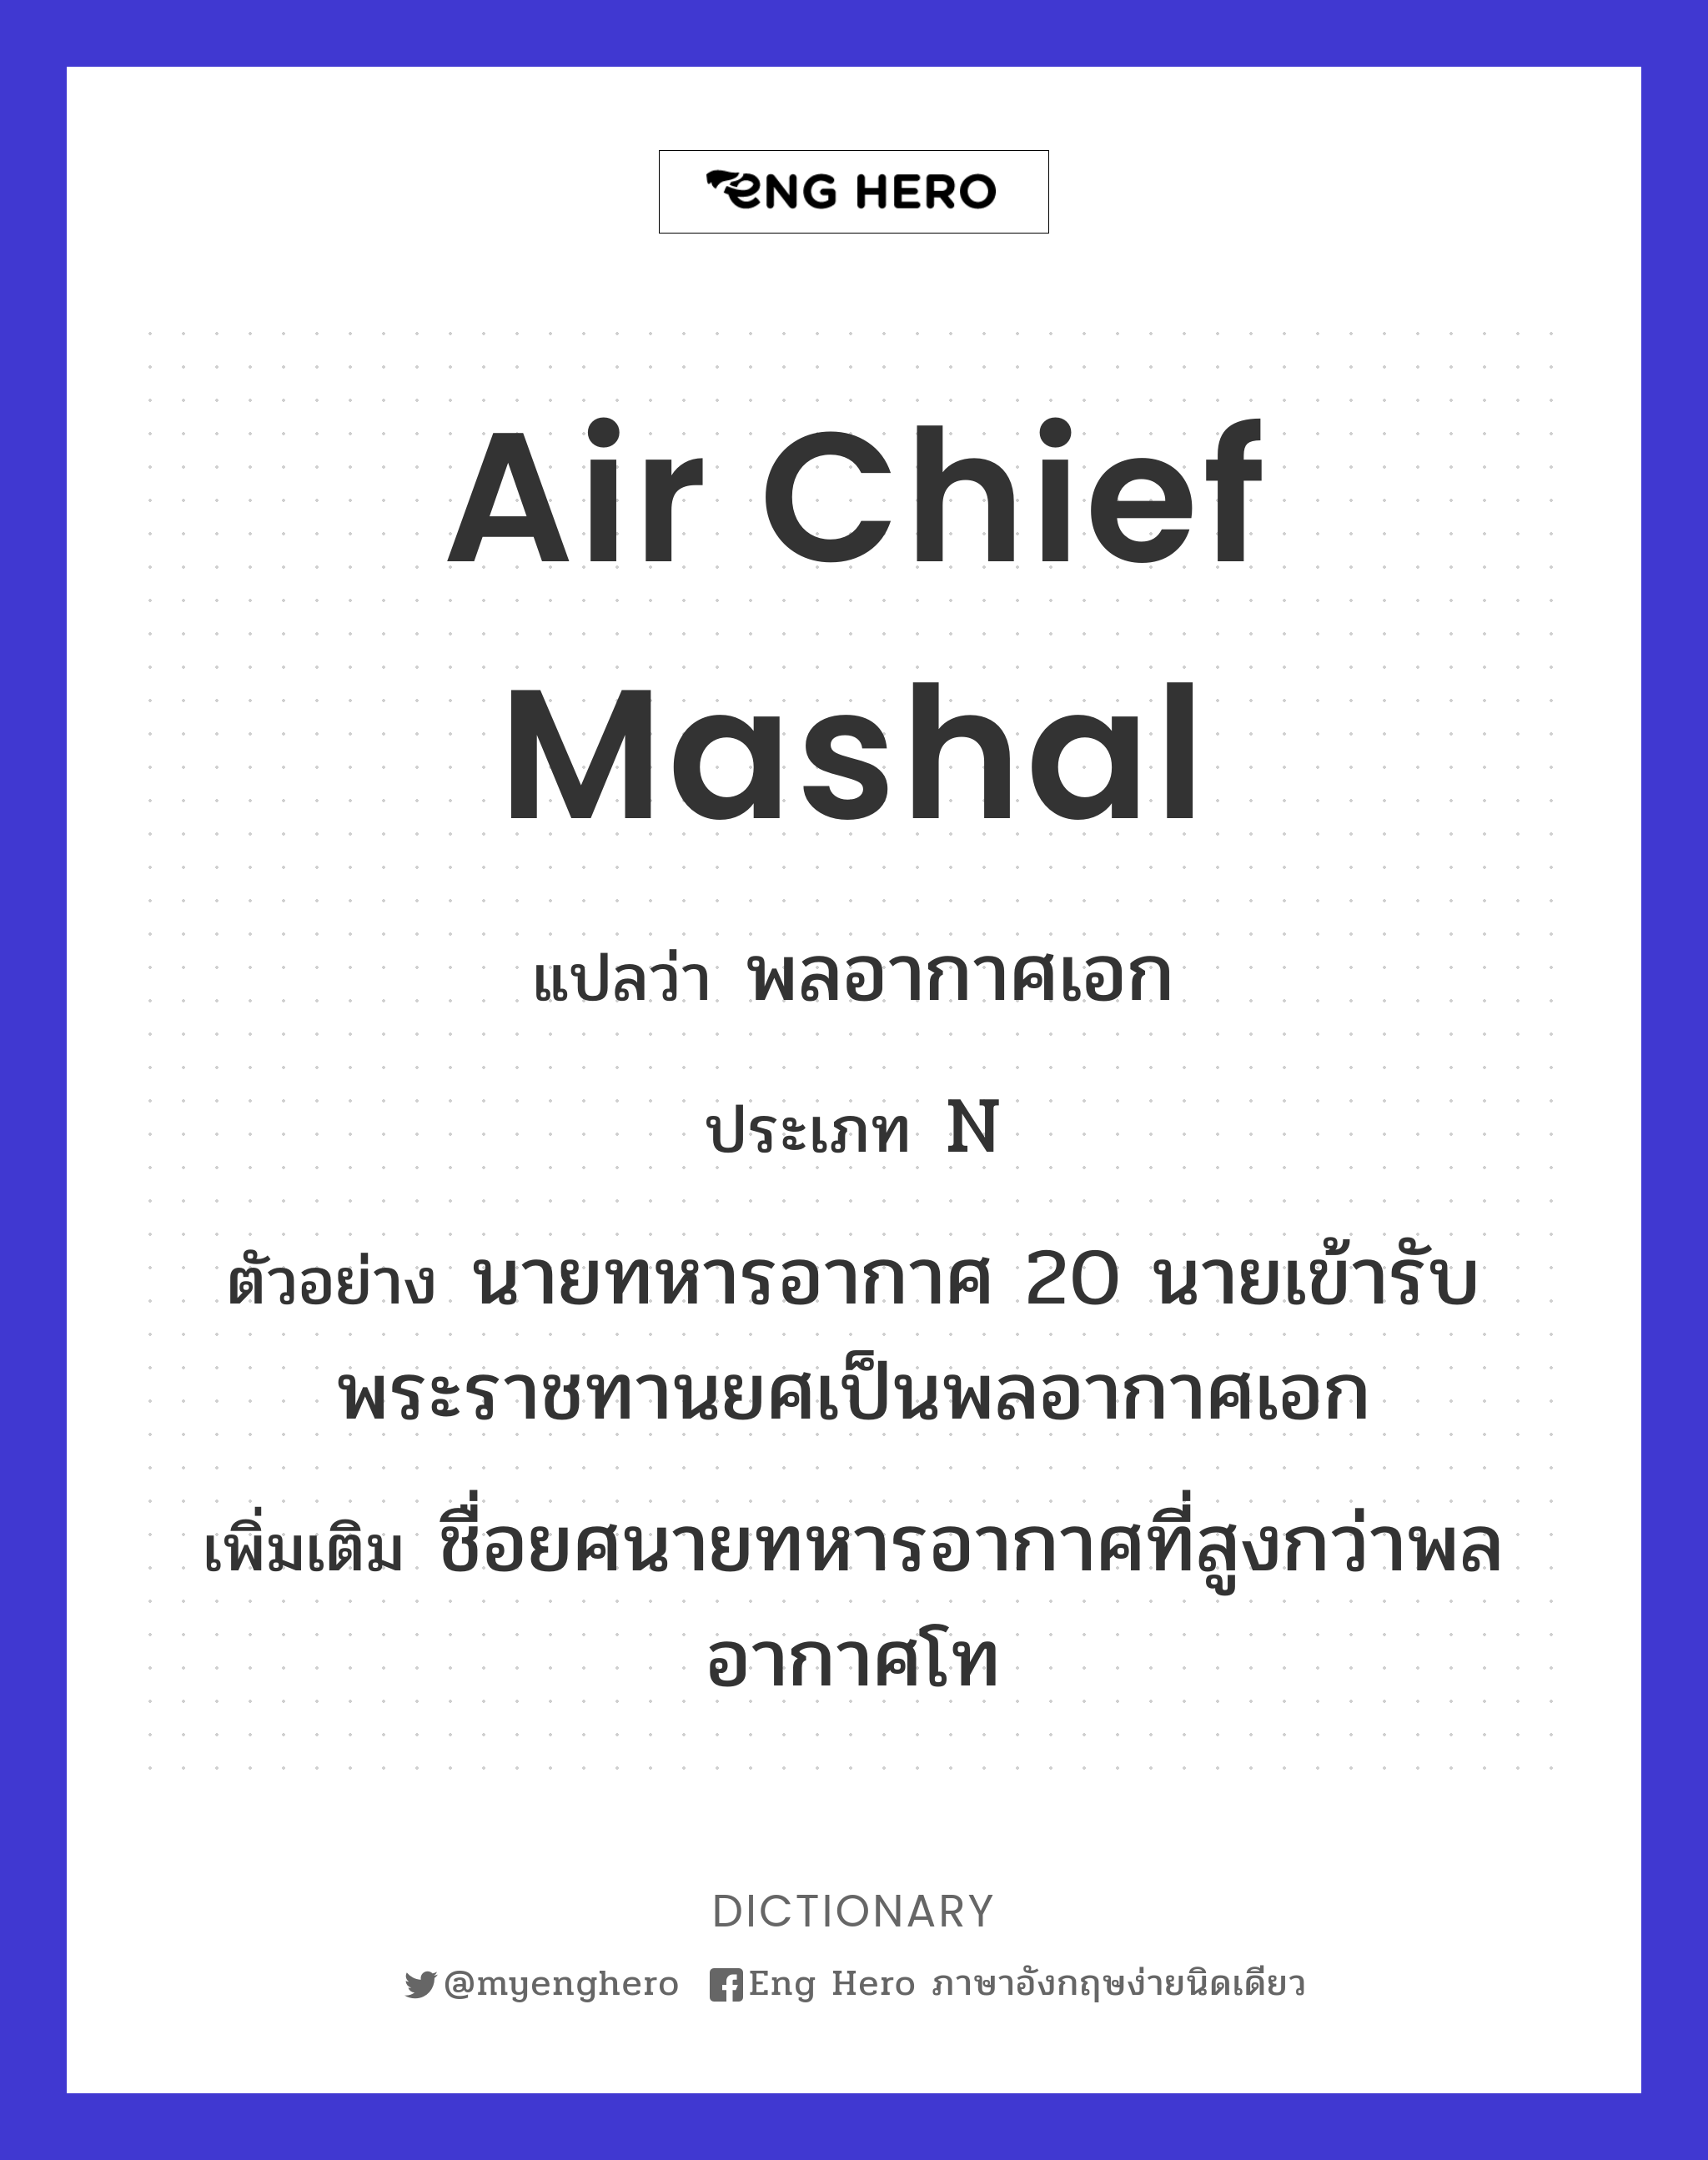 Air Chief Mashal